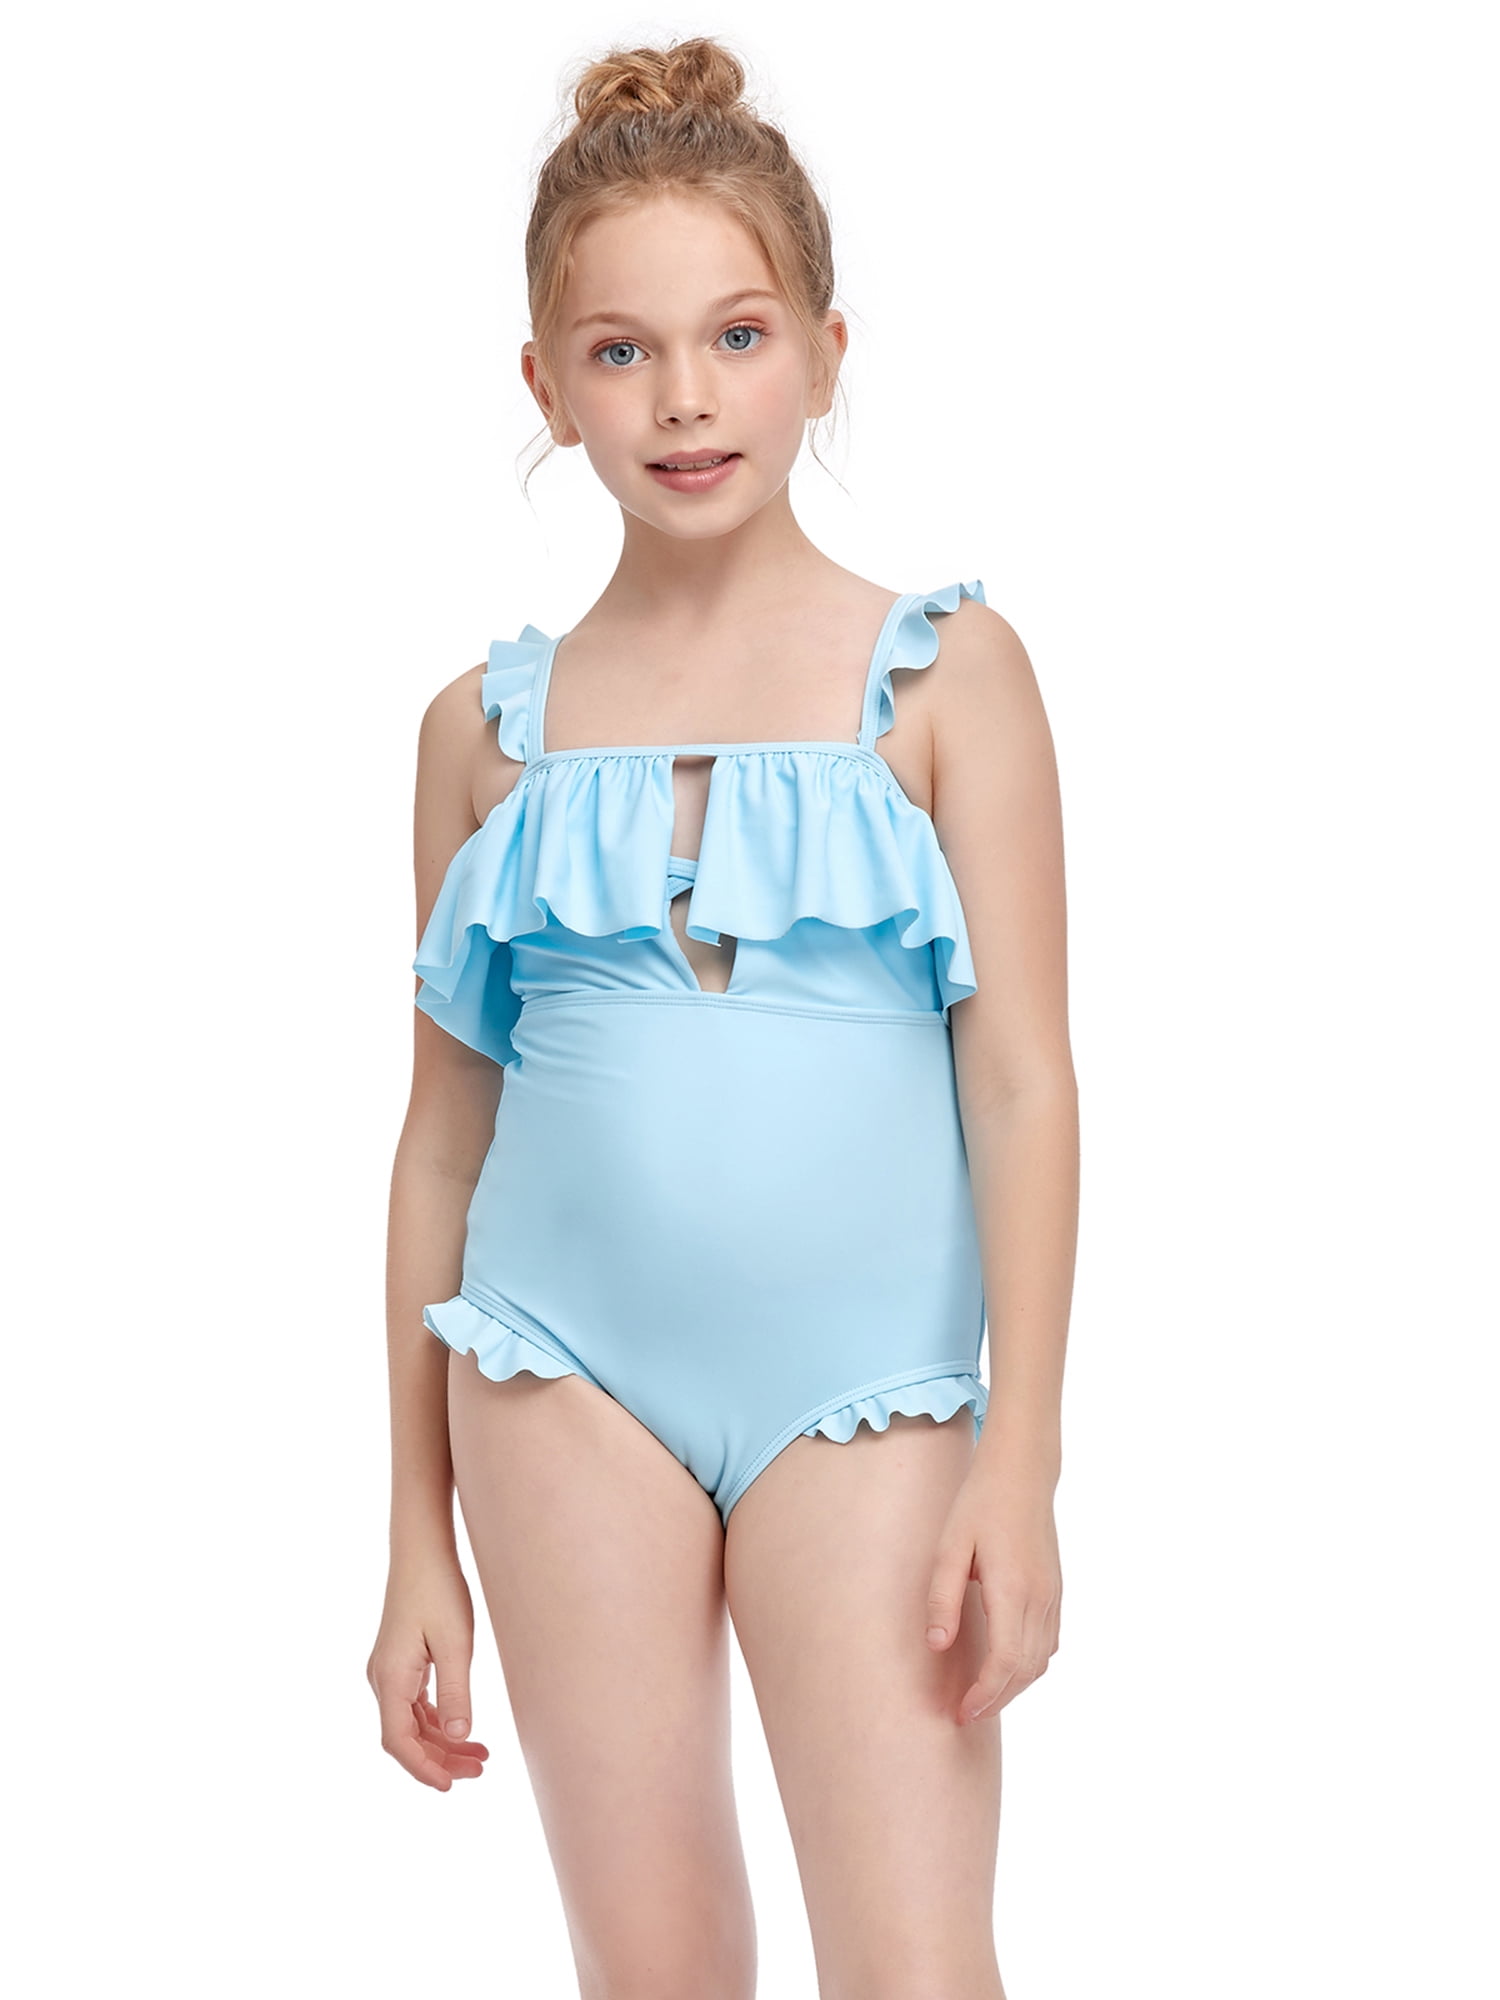 ONES Infant Toddler Baby Girls Sleeveless Scoop Neck Floral Piece Bikini Ruffle Swimsuit 